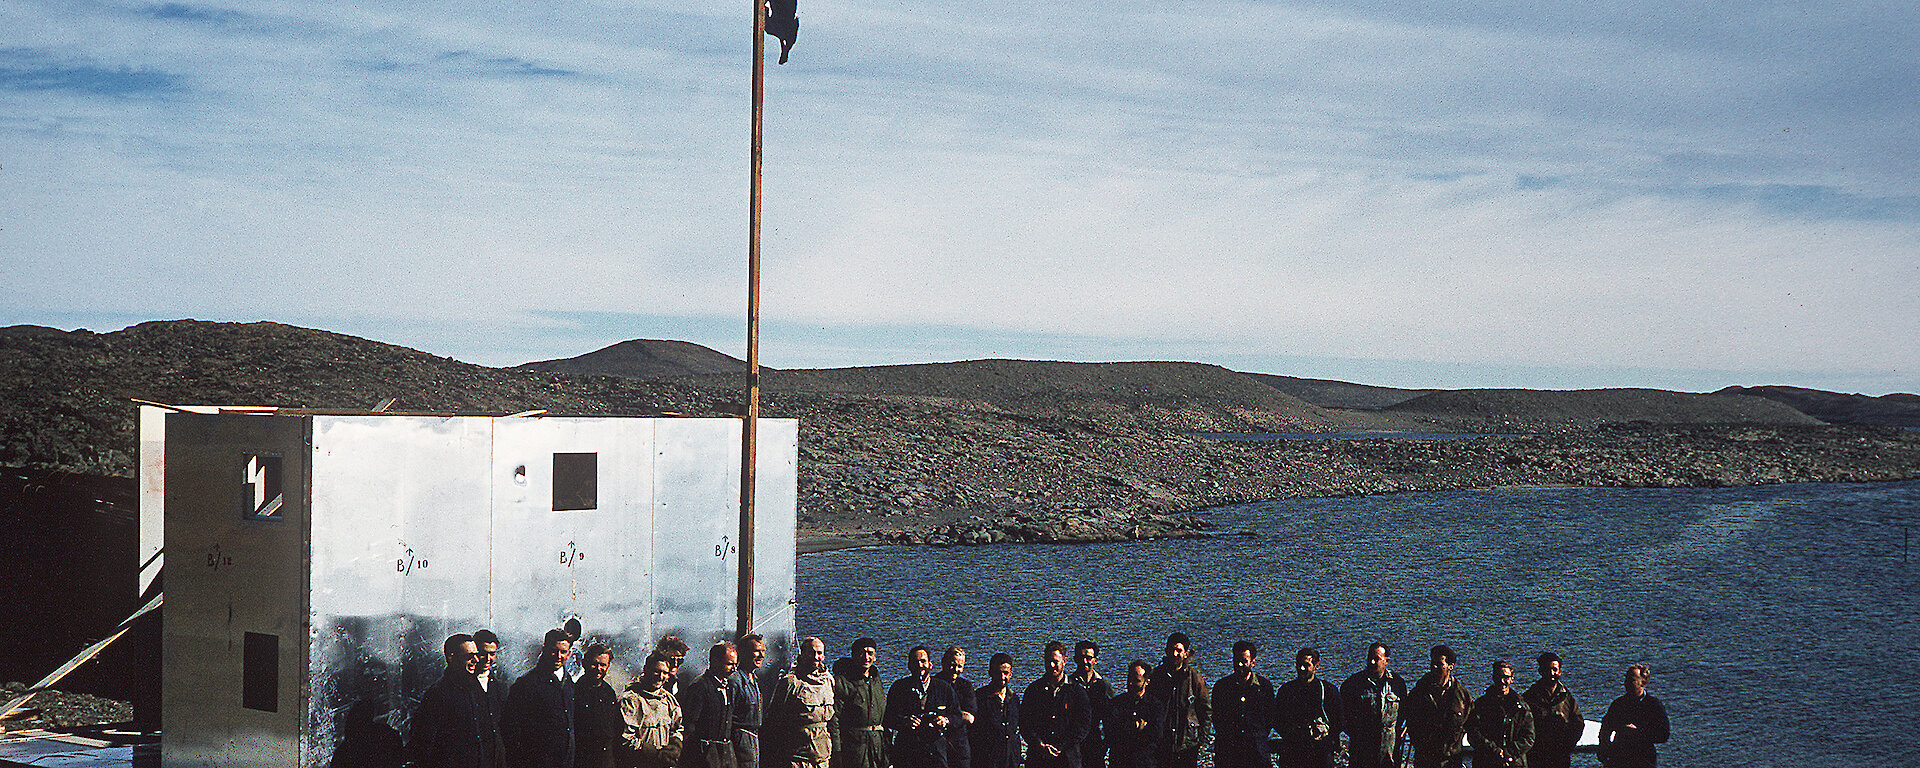 Group of men posing beside flag and buildings at Davis